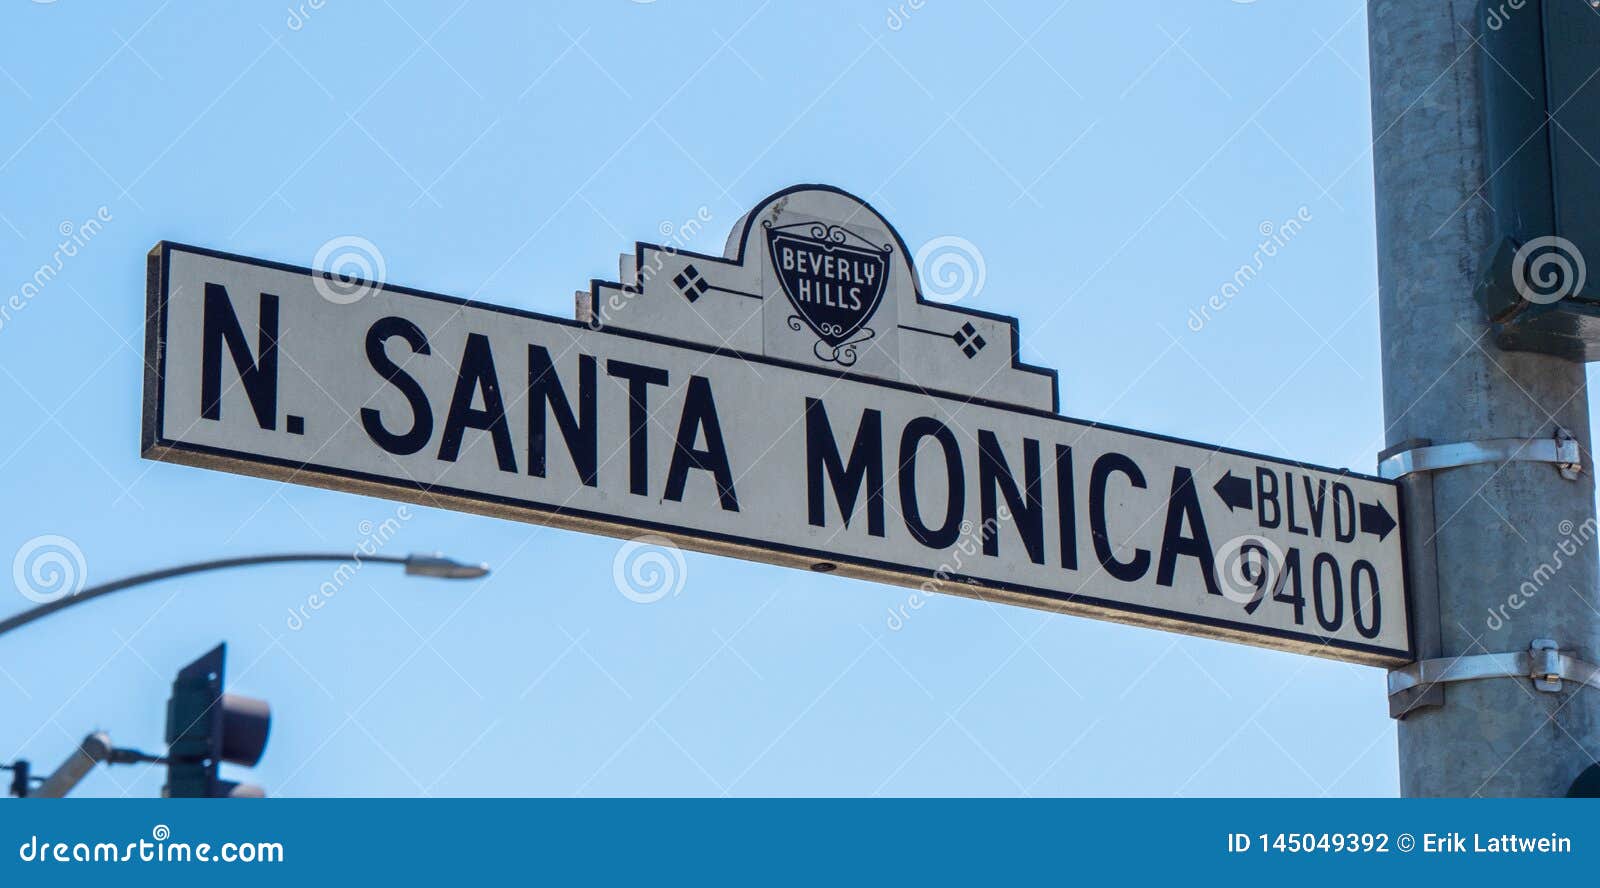 Placa de calle Santa Monica Boulevard en Beverly Hills - CALIFORNIA, los E.E.U.U. - 18 DE MARZO DE 2019. Placa de calle Santa Monica Boulevard en Beverly Hills - CALIFORNIA, ESTADOS UNIDOS - 18 DE MARZO DE 2019